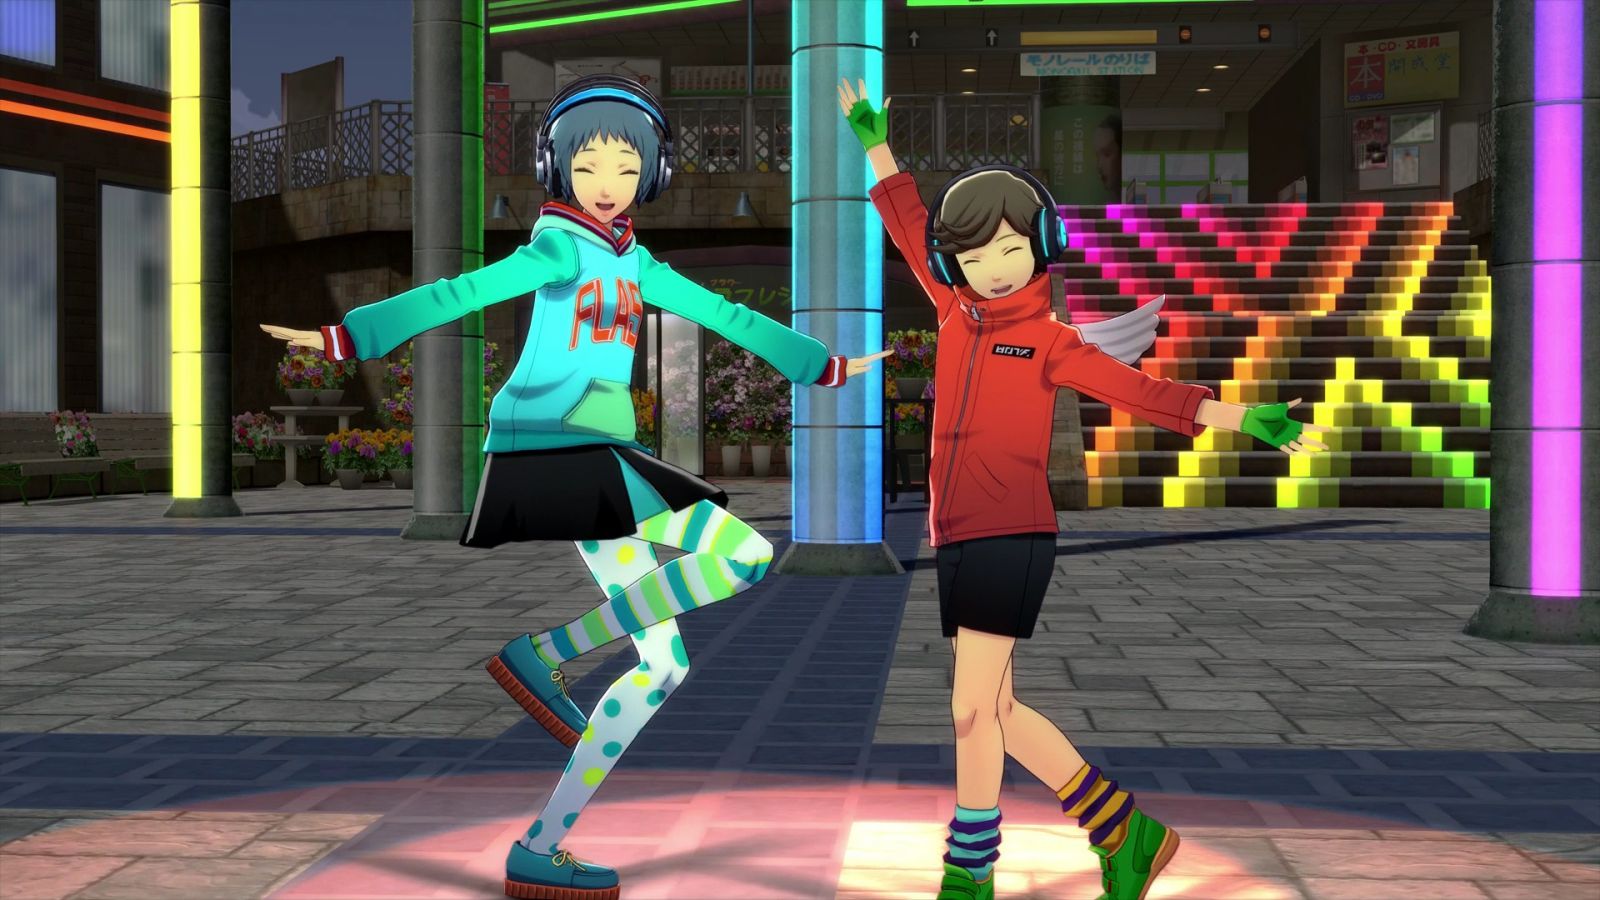 Persona 3: Dancing in Moonlight [PSVR Compatible] (PS4)